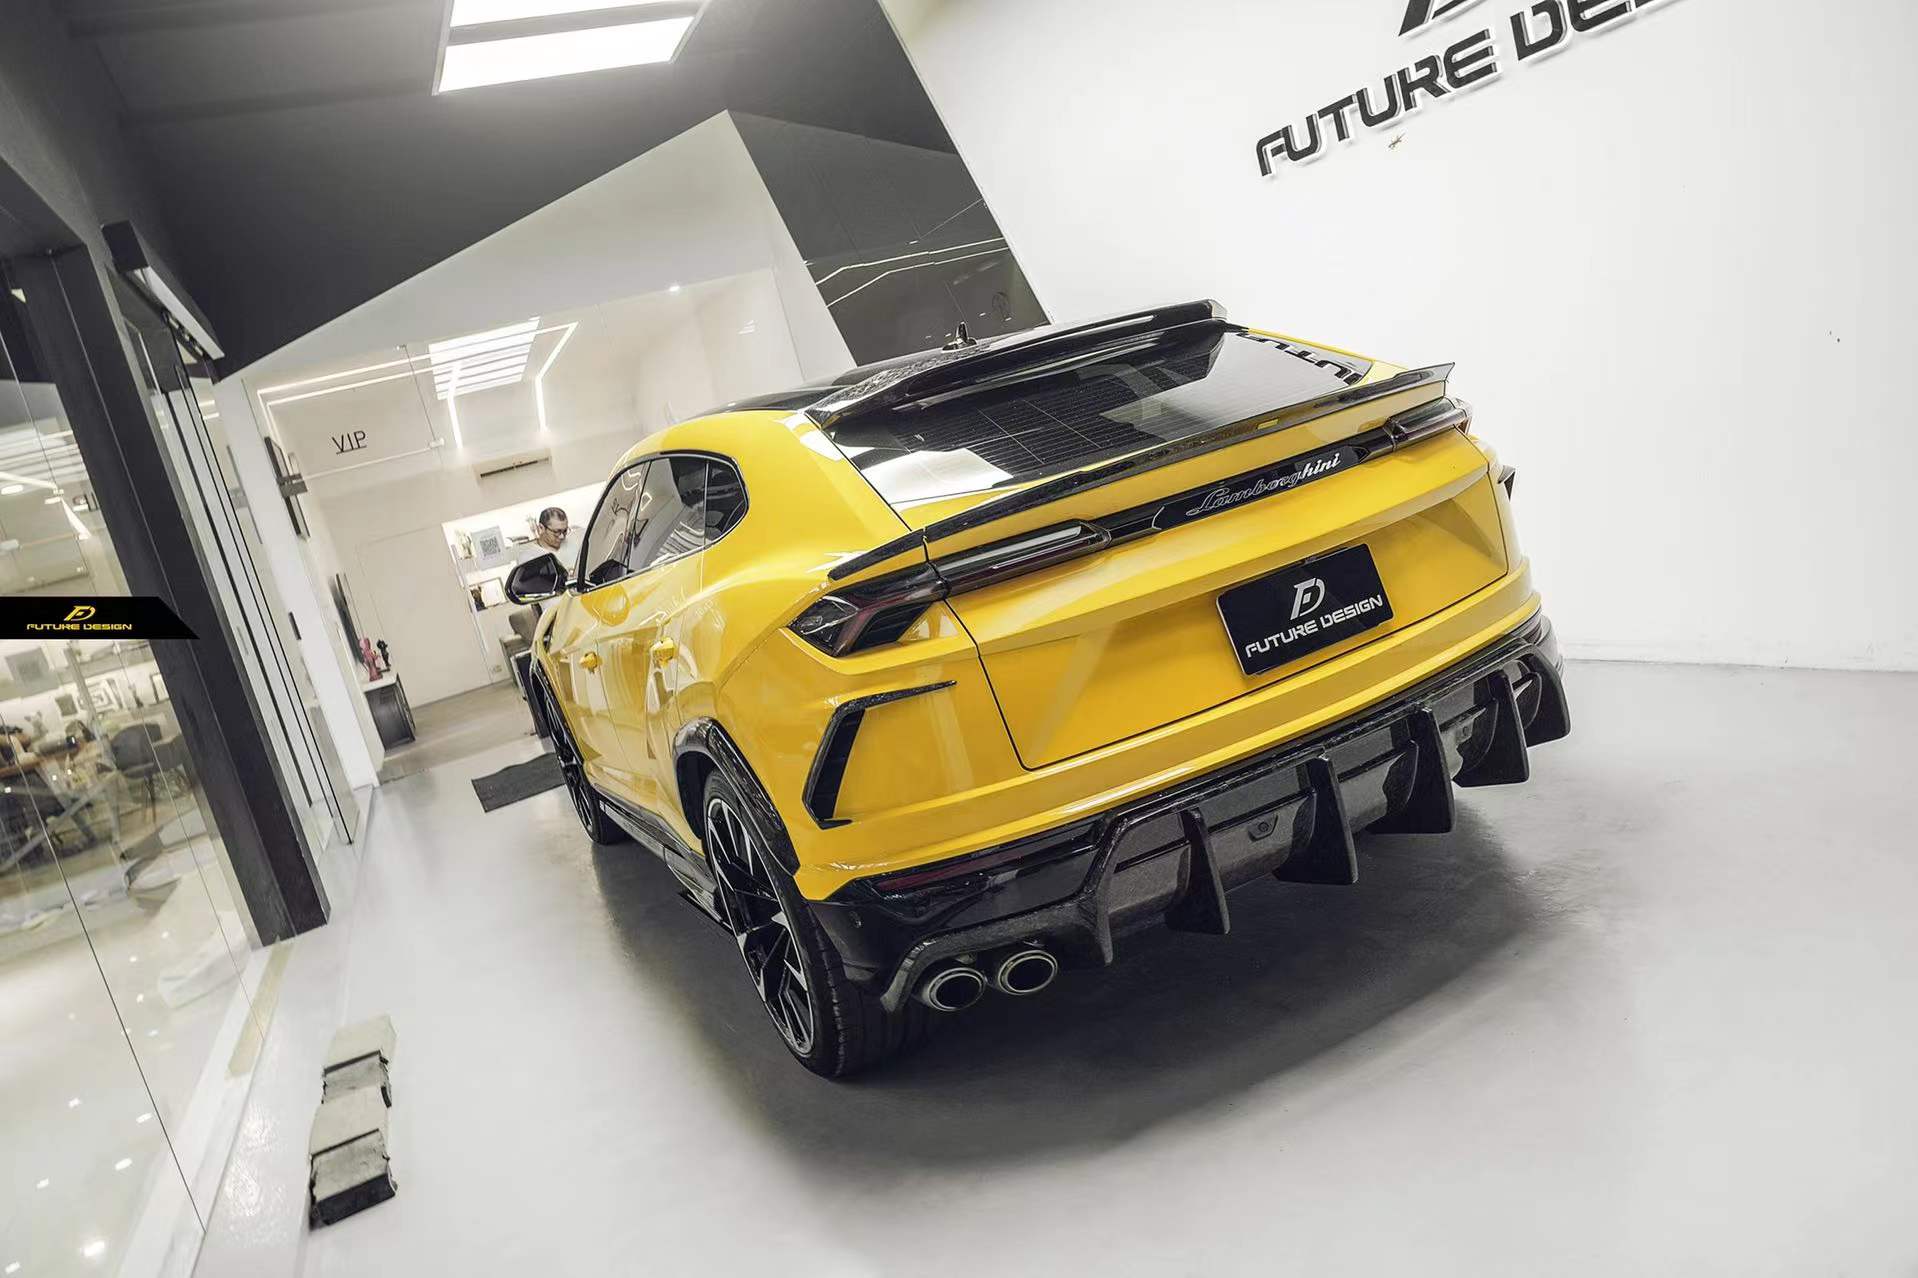 Future Design FD Carbon Fiber REAR ROOF SPOILER for Lamborghini Urus